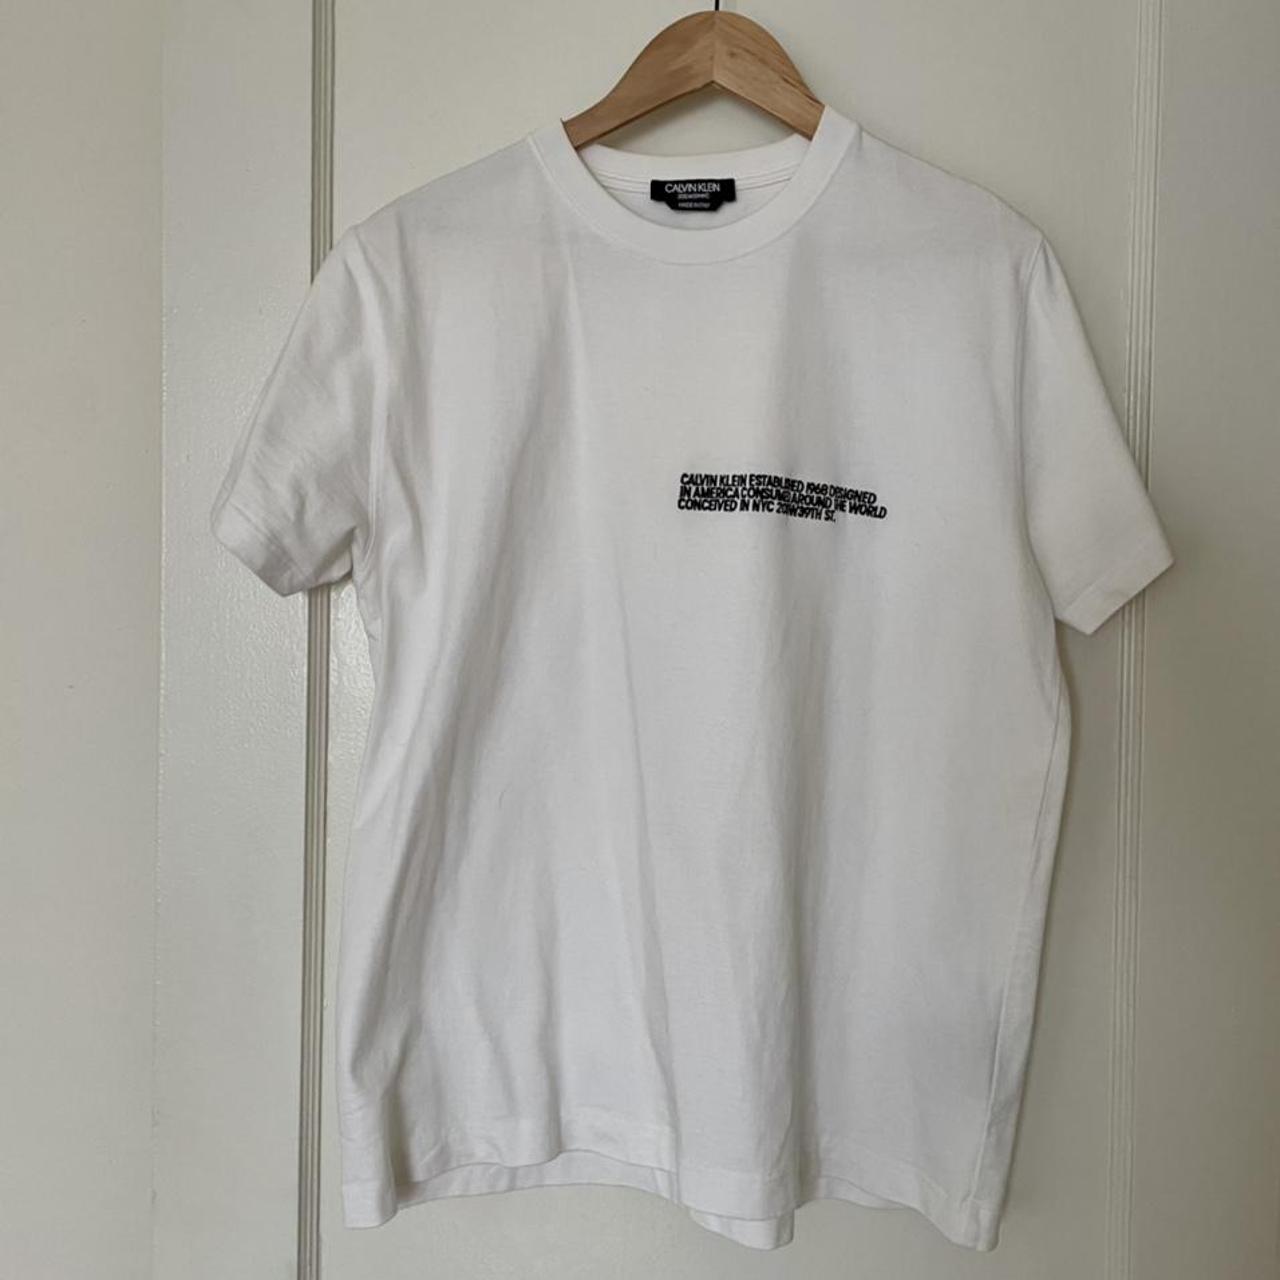 Raf Simons Women's Black and White T-shirt (2)